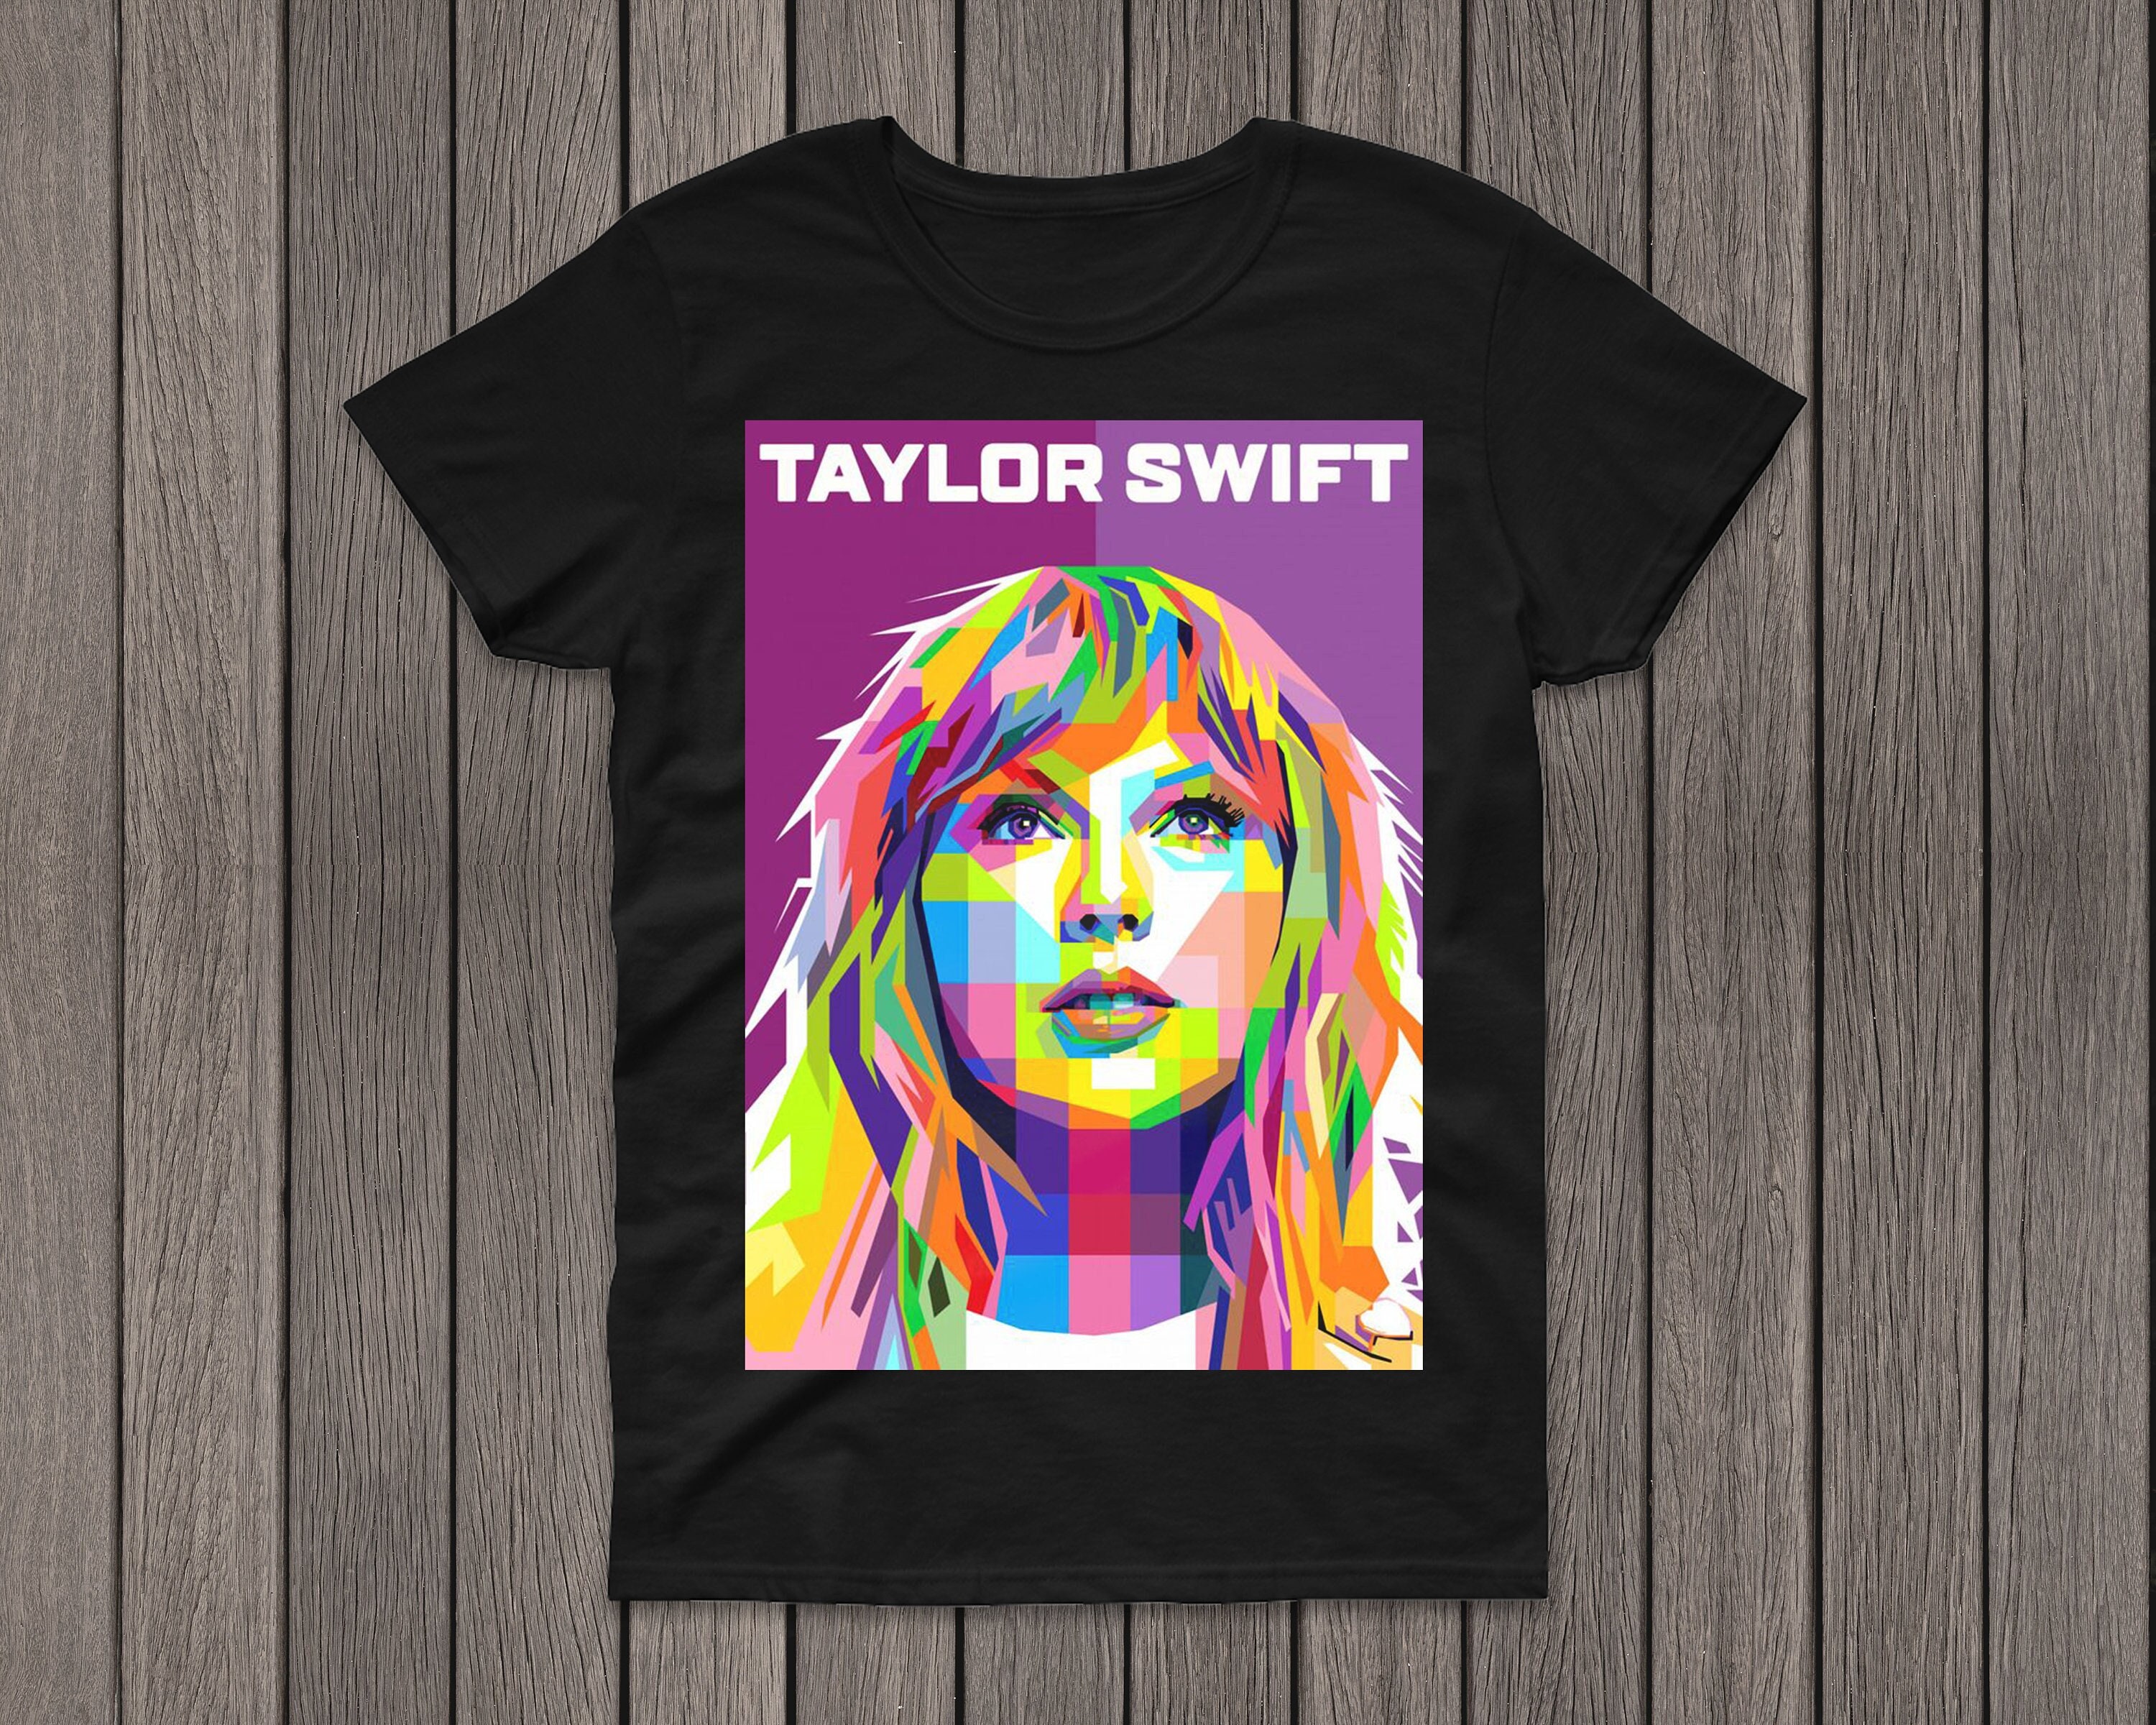 Camiseta Oversized Taylor Swift 1989 - Sensorial, camisetas exclusivas,  compre online